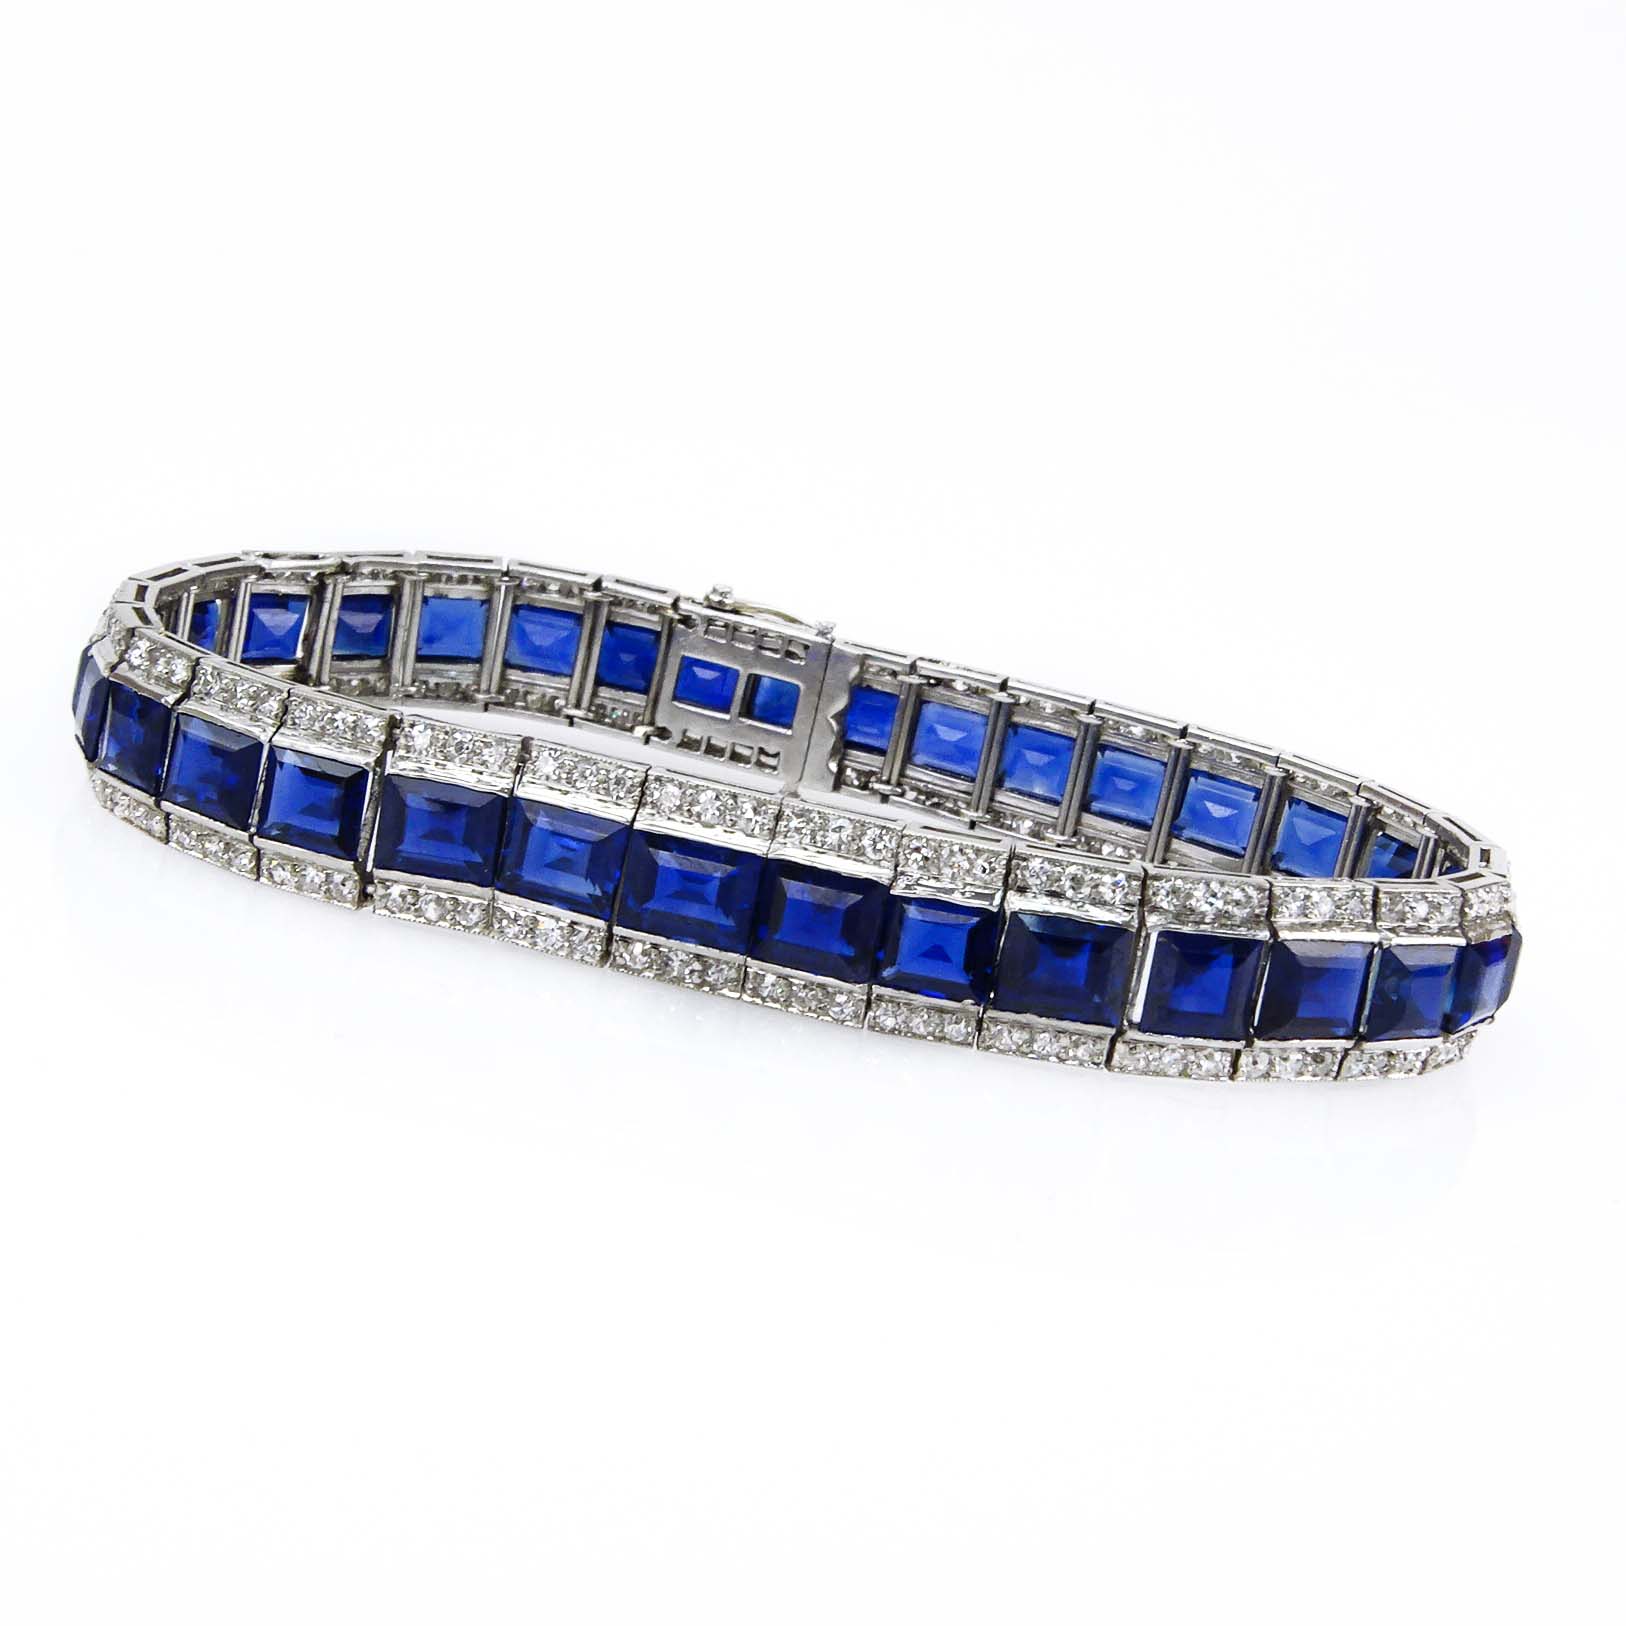 GIA Certified Art Deco 22.0 Carat Unheated Cut Burma Sapphire, 3.50 Carat Diamond and Platinum Bracelet. Superb quality sapphires with vivid saturation of color. 